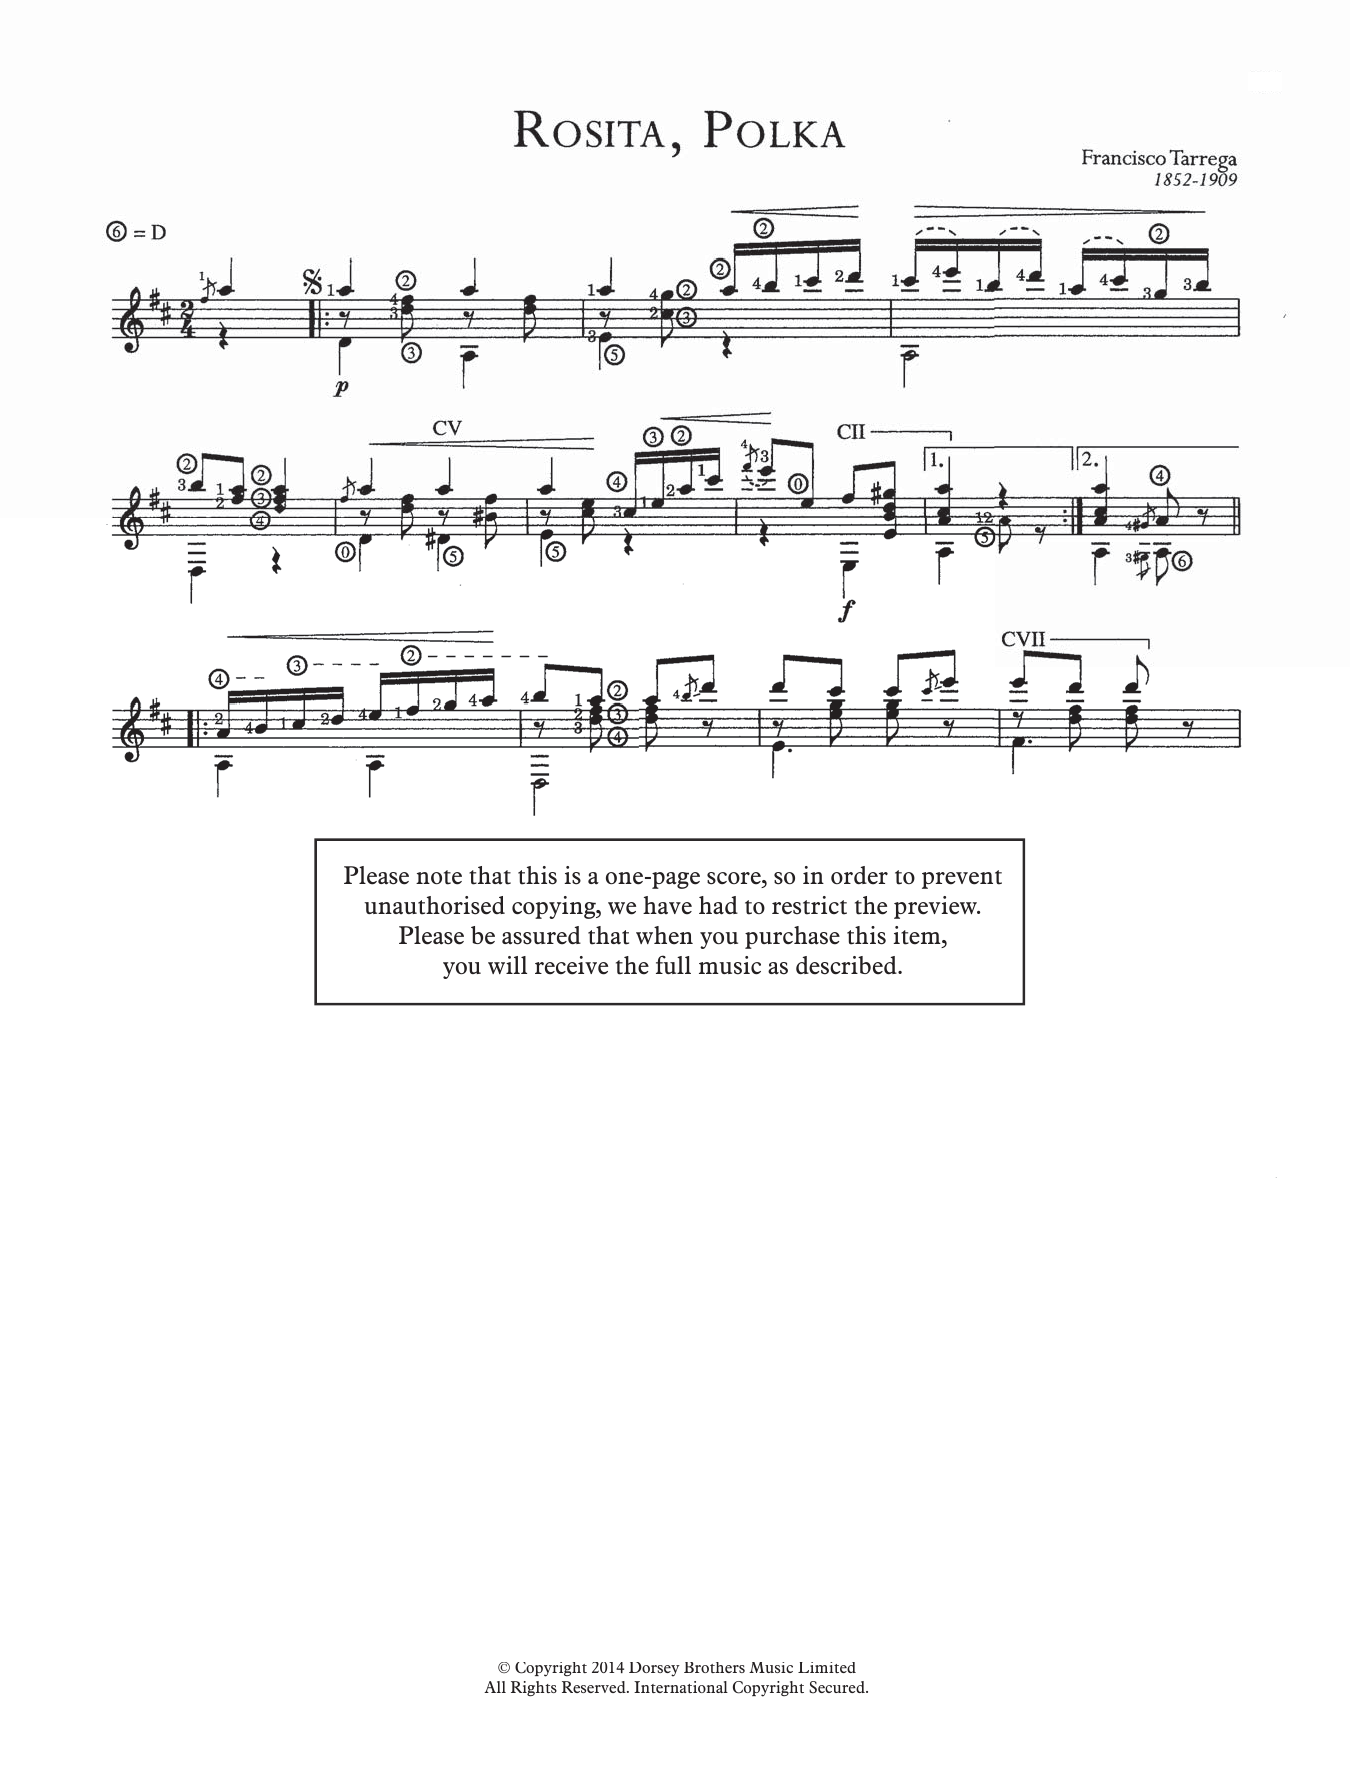 Francisco Tárrega Rosita, Polka Sheet Music Notes & Chords for Guitar - Download or Print PDF